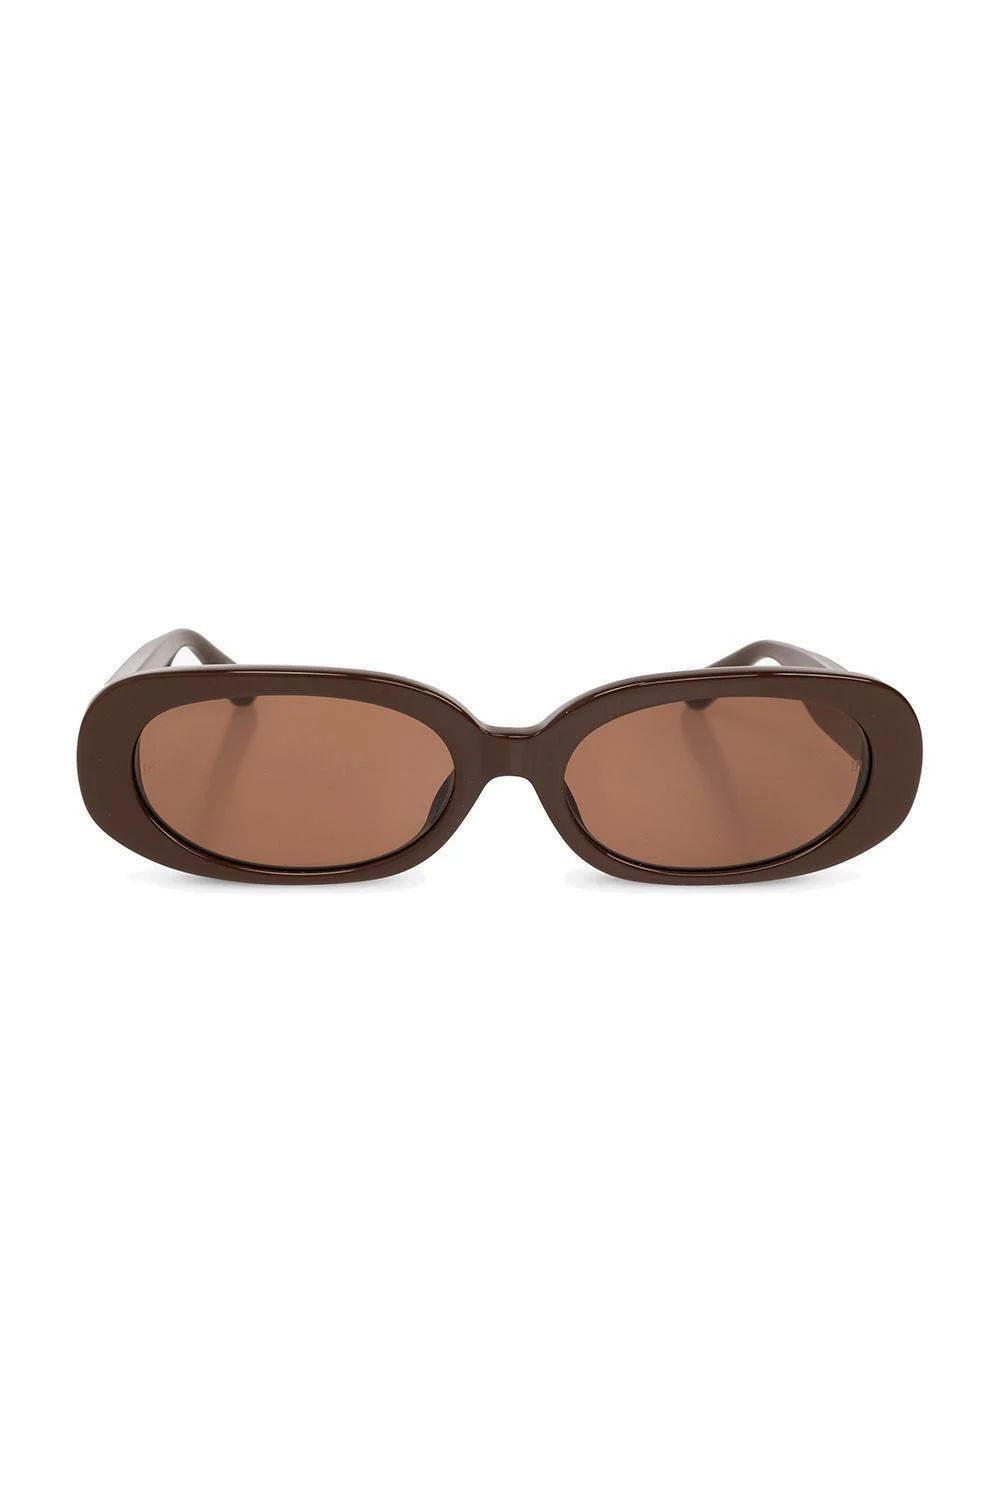 Linda Farrow X Rowen Rose Cara Oval Frame Sunglasses | Cettire Global